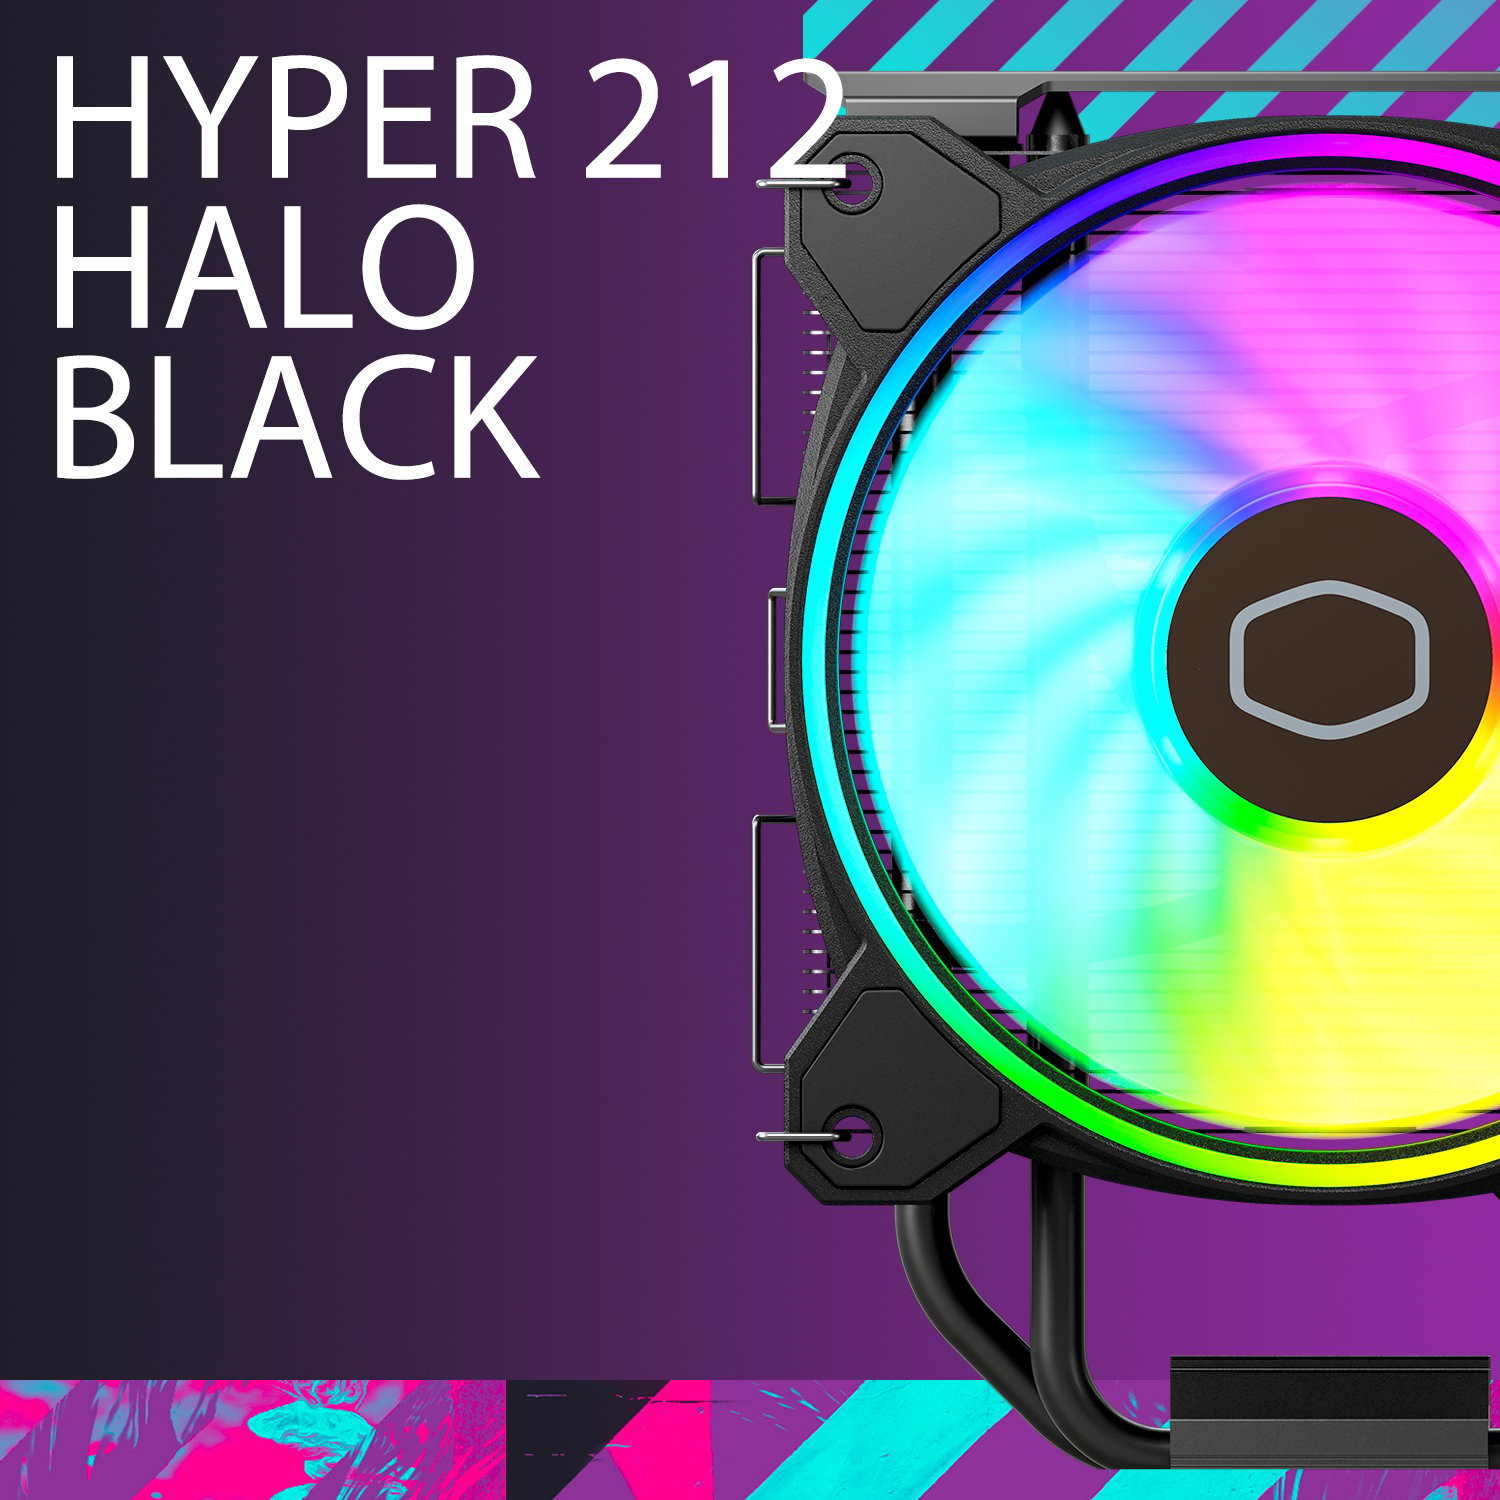 Cooler Master Hyper 212 Halo Black CPU Air Cooler